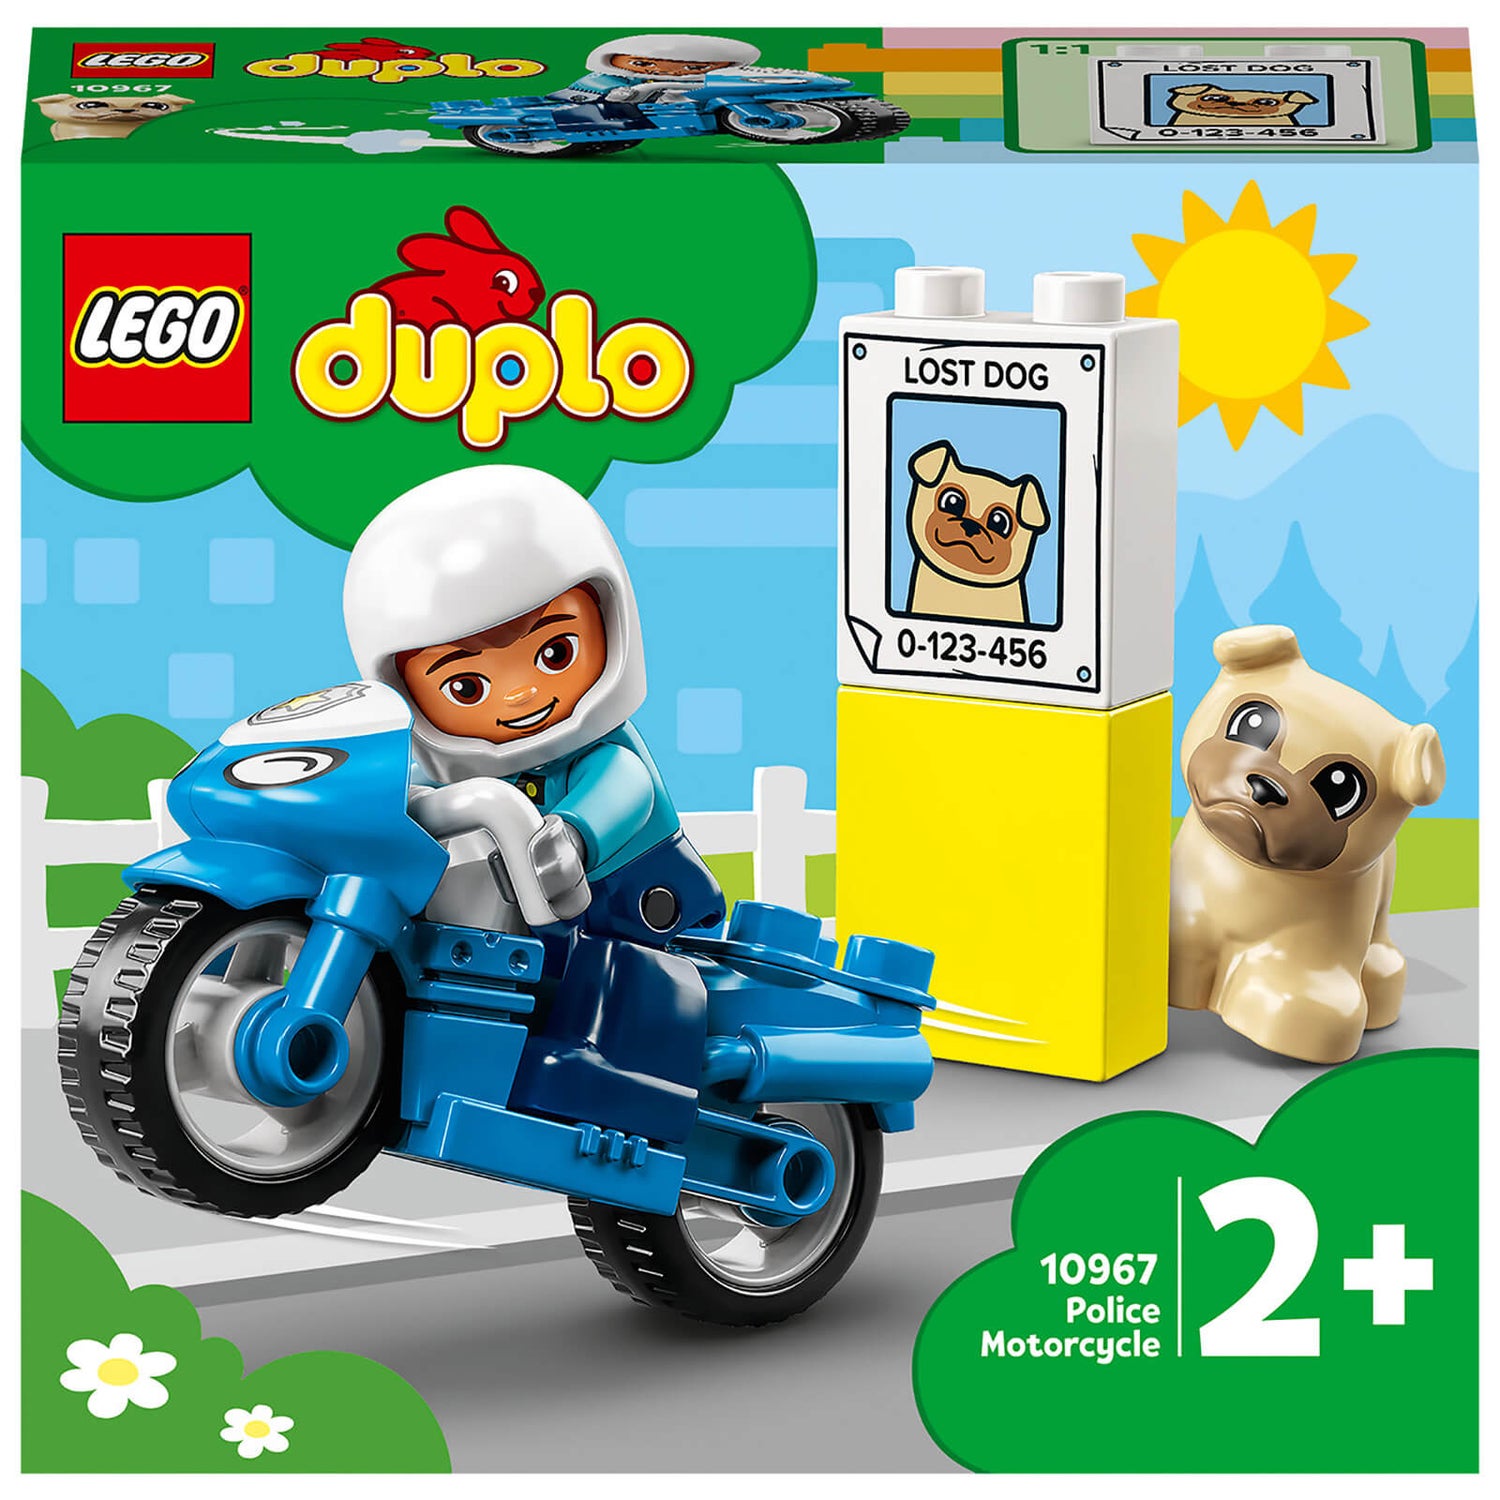 LEGO DUPLO Rescue Police Motorcycle Toy for Toddlers (10967) Toys - Zavvi UK